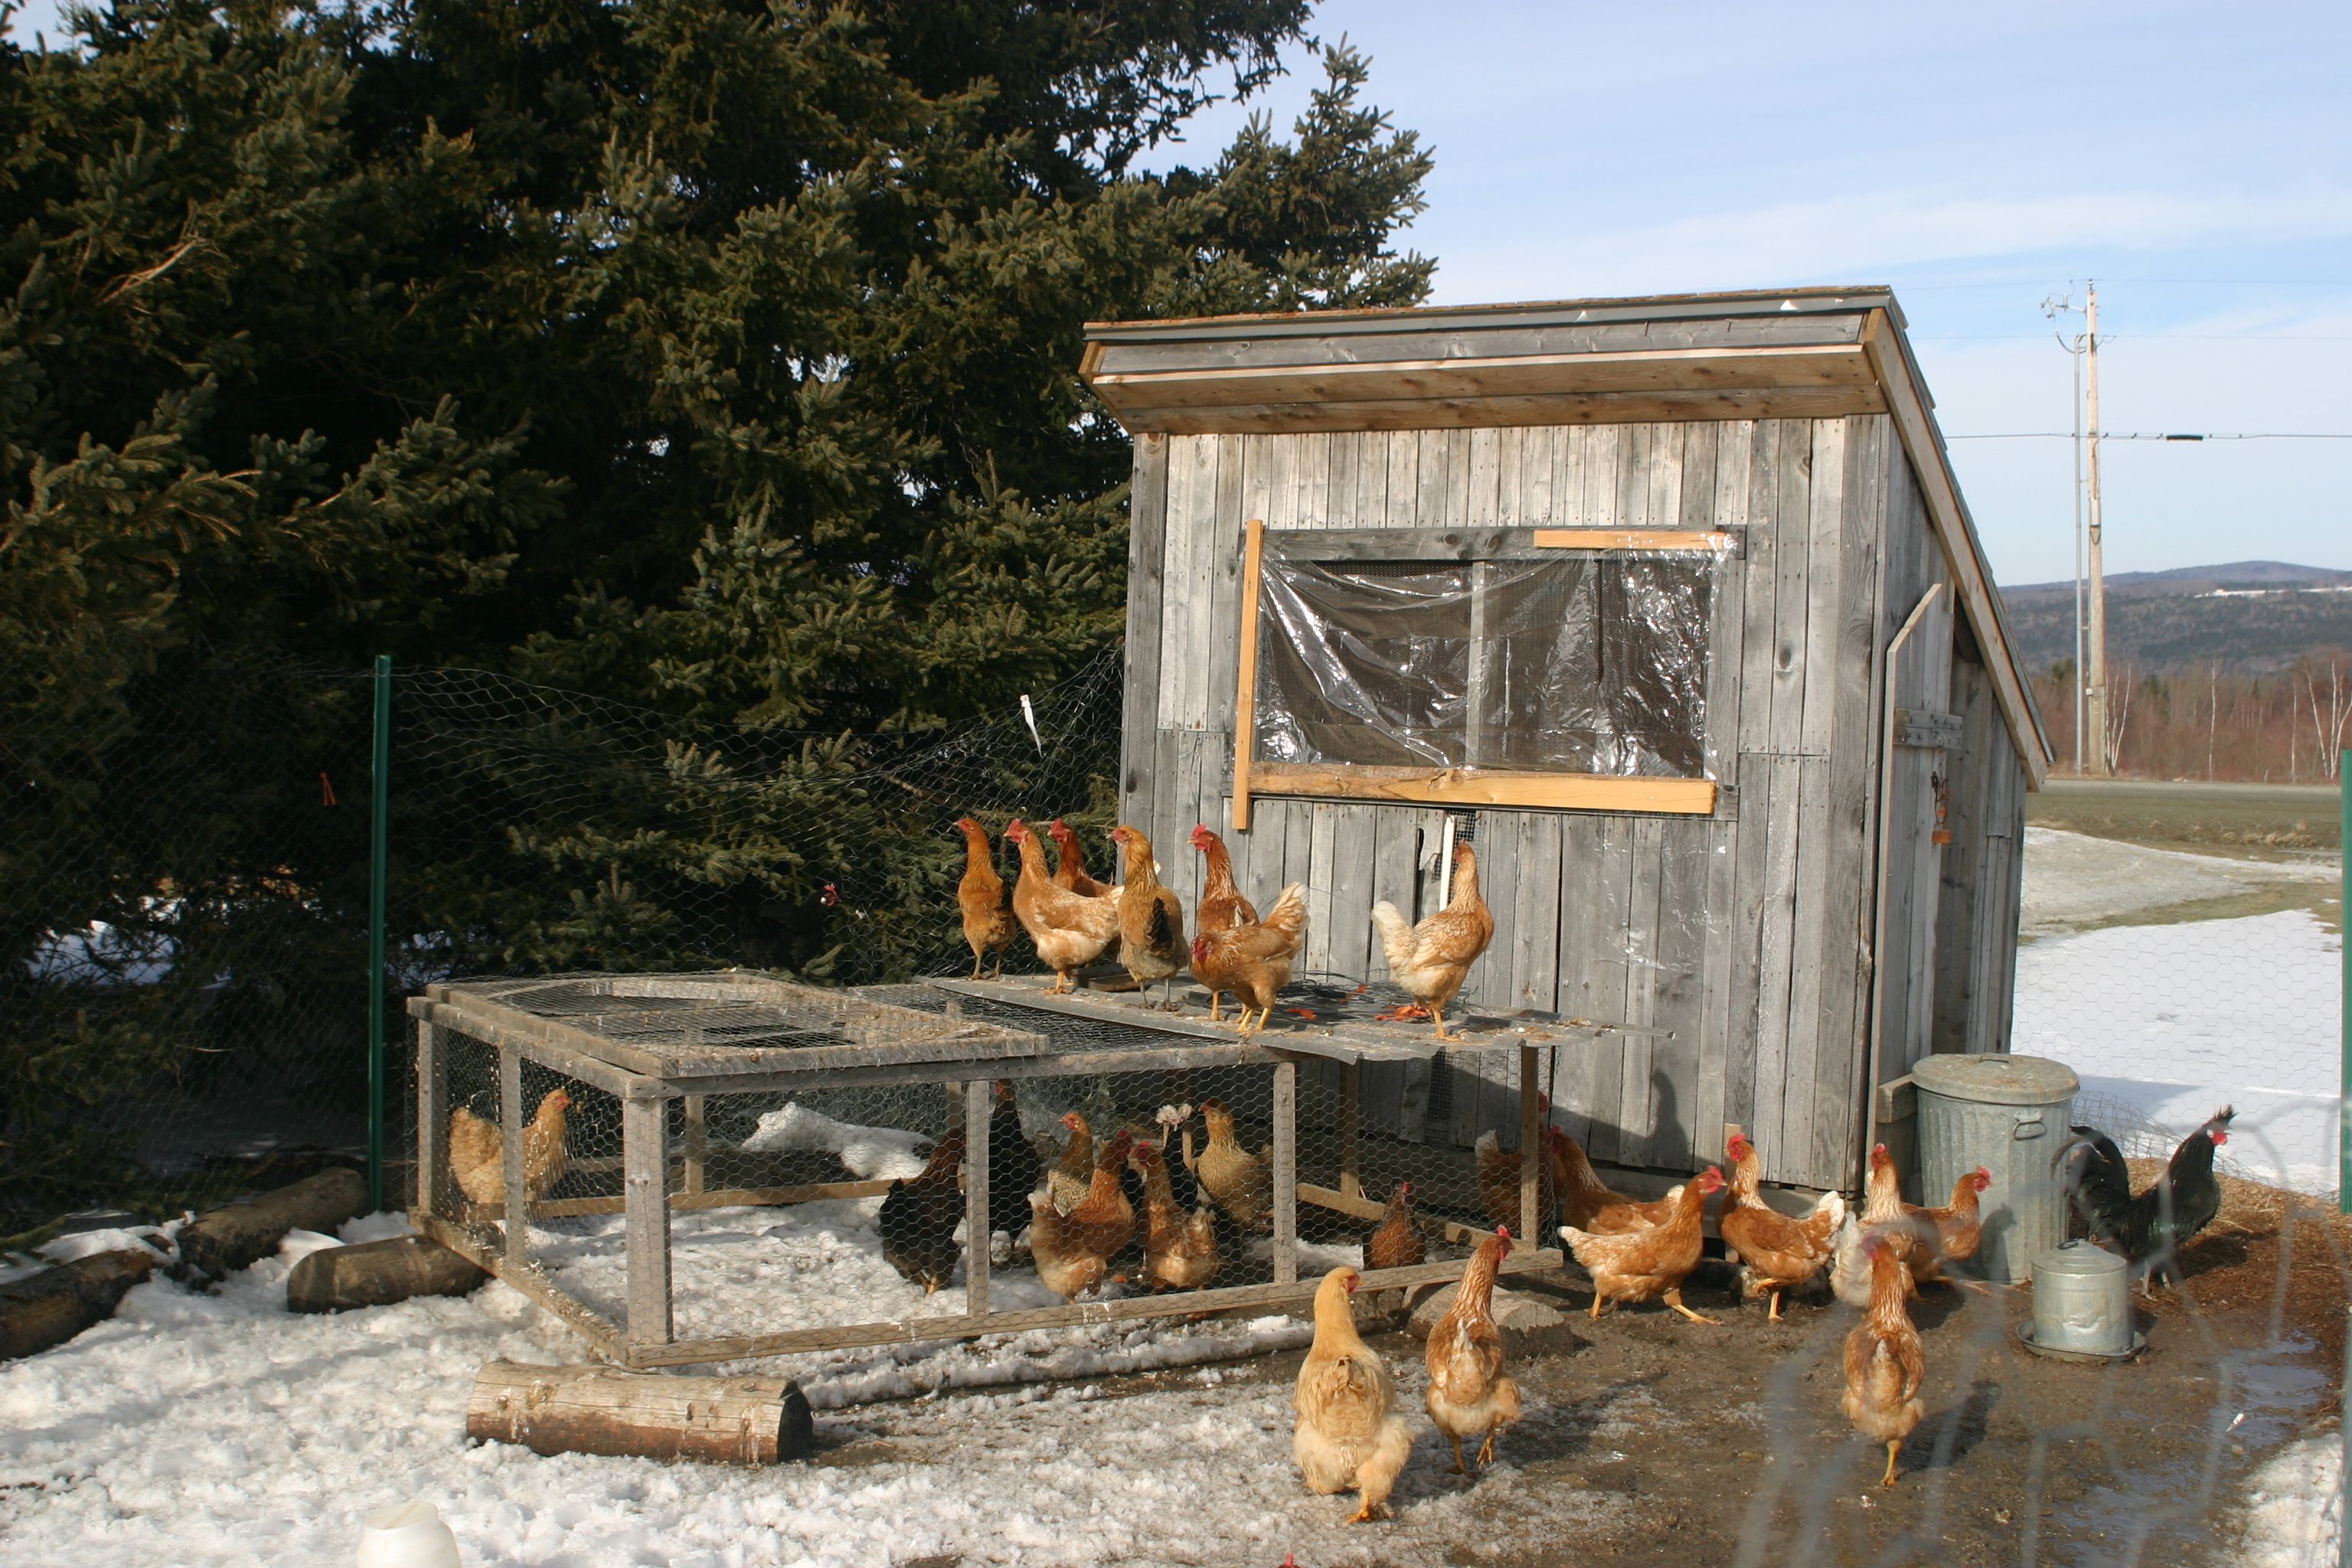 File:Chicken coop in winter.jpg - Wikipedia, the free encyclopedia